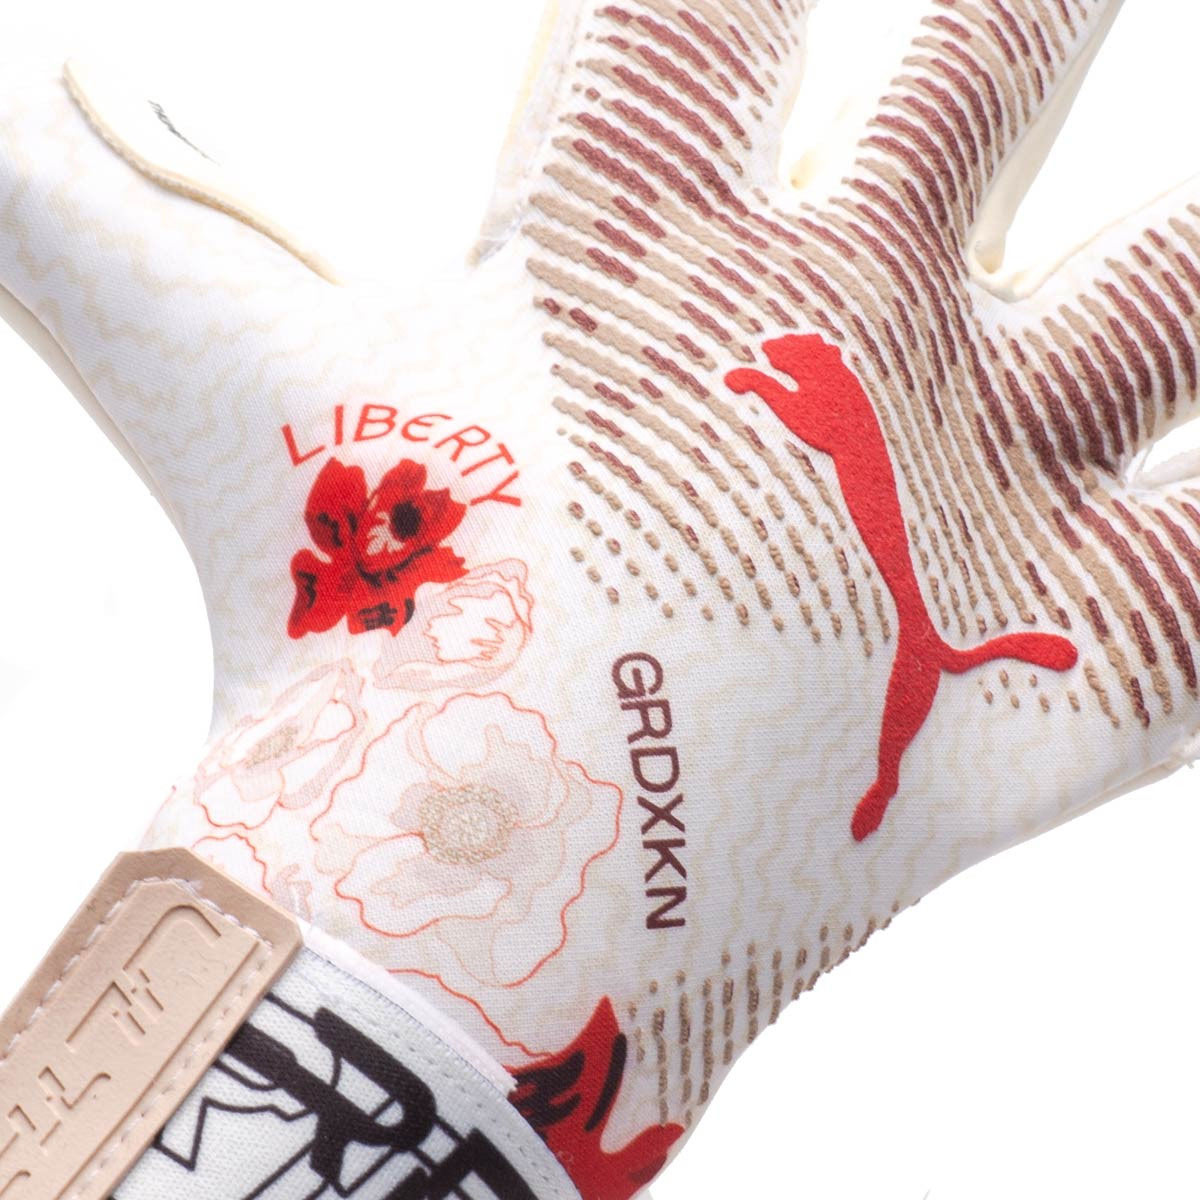 Puma X Liberty Ultra Grip 1 Hybrid GK Gloves - Just Keepers